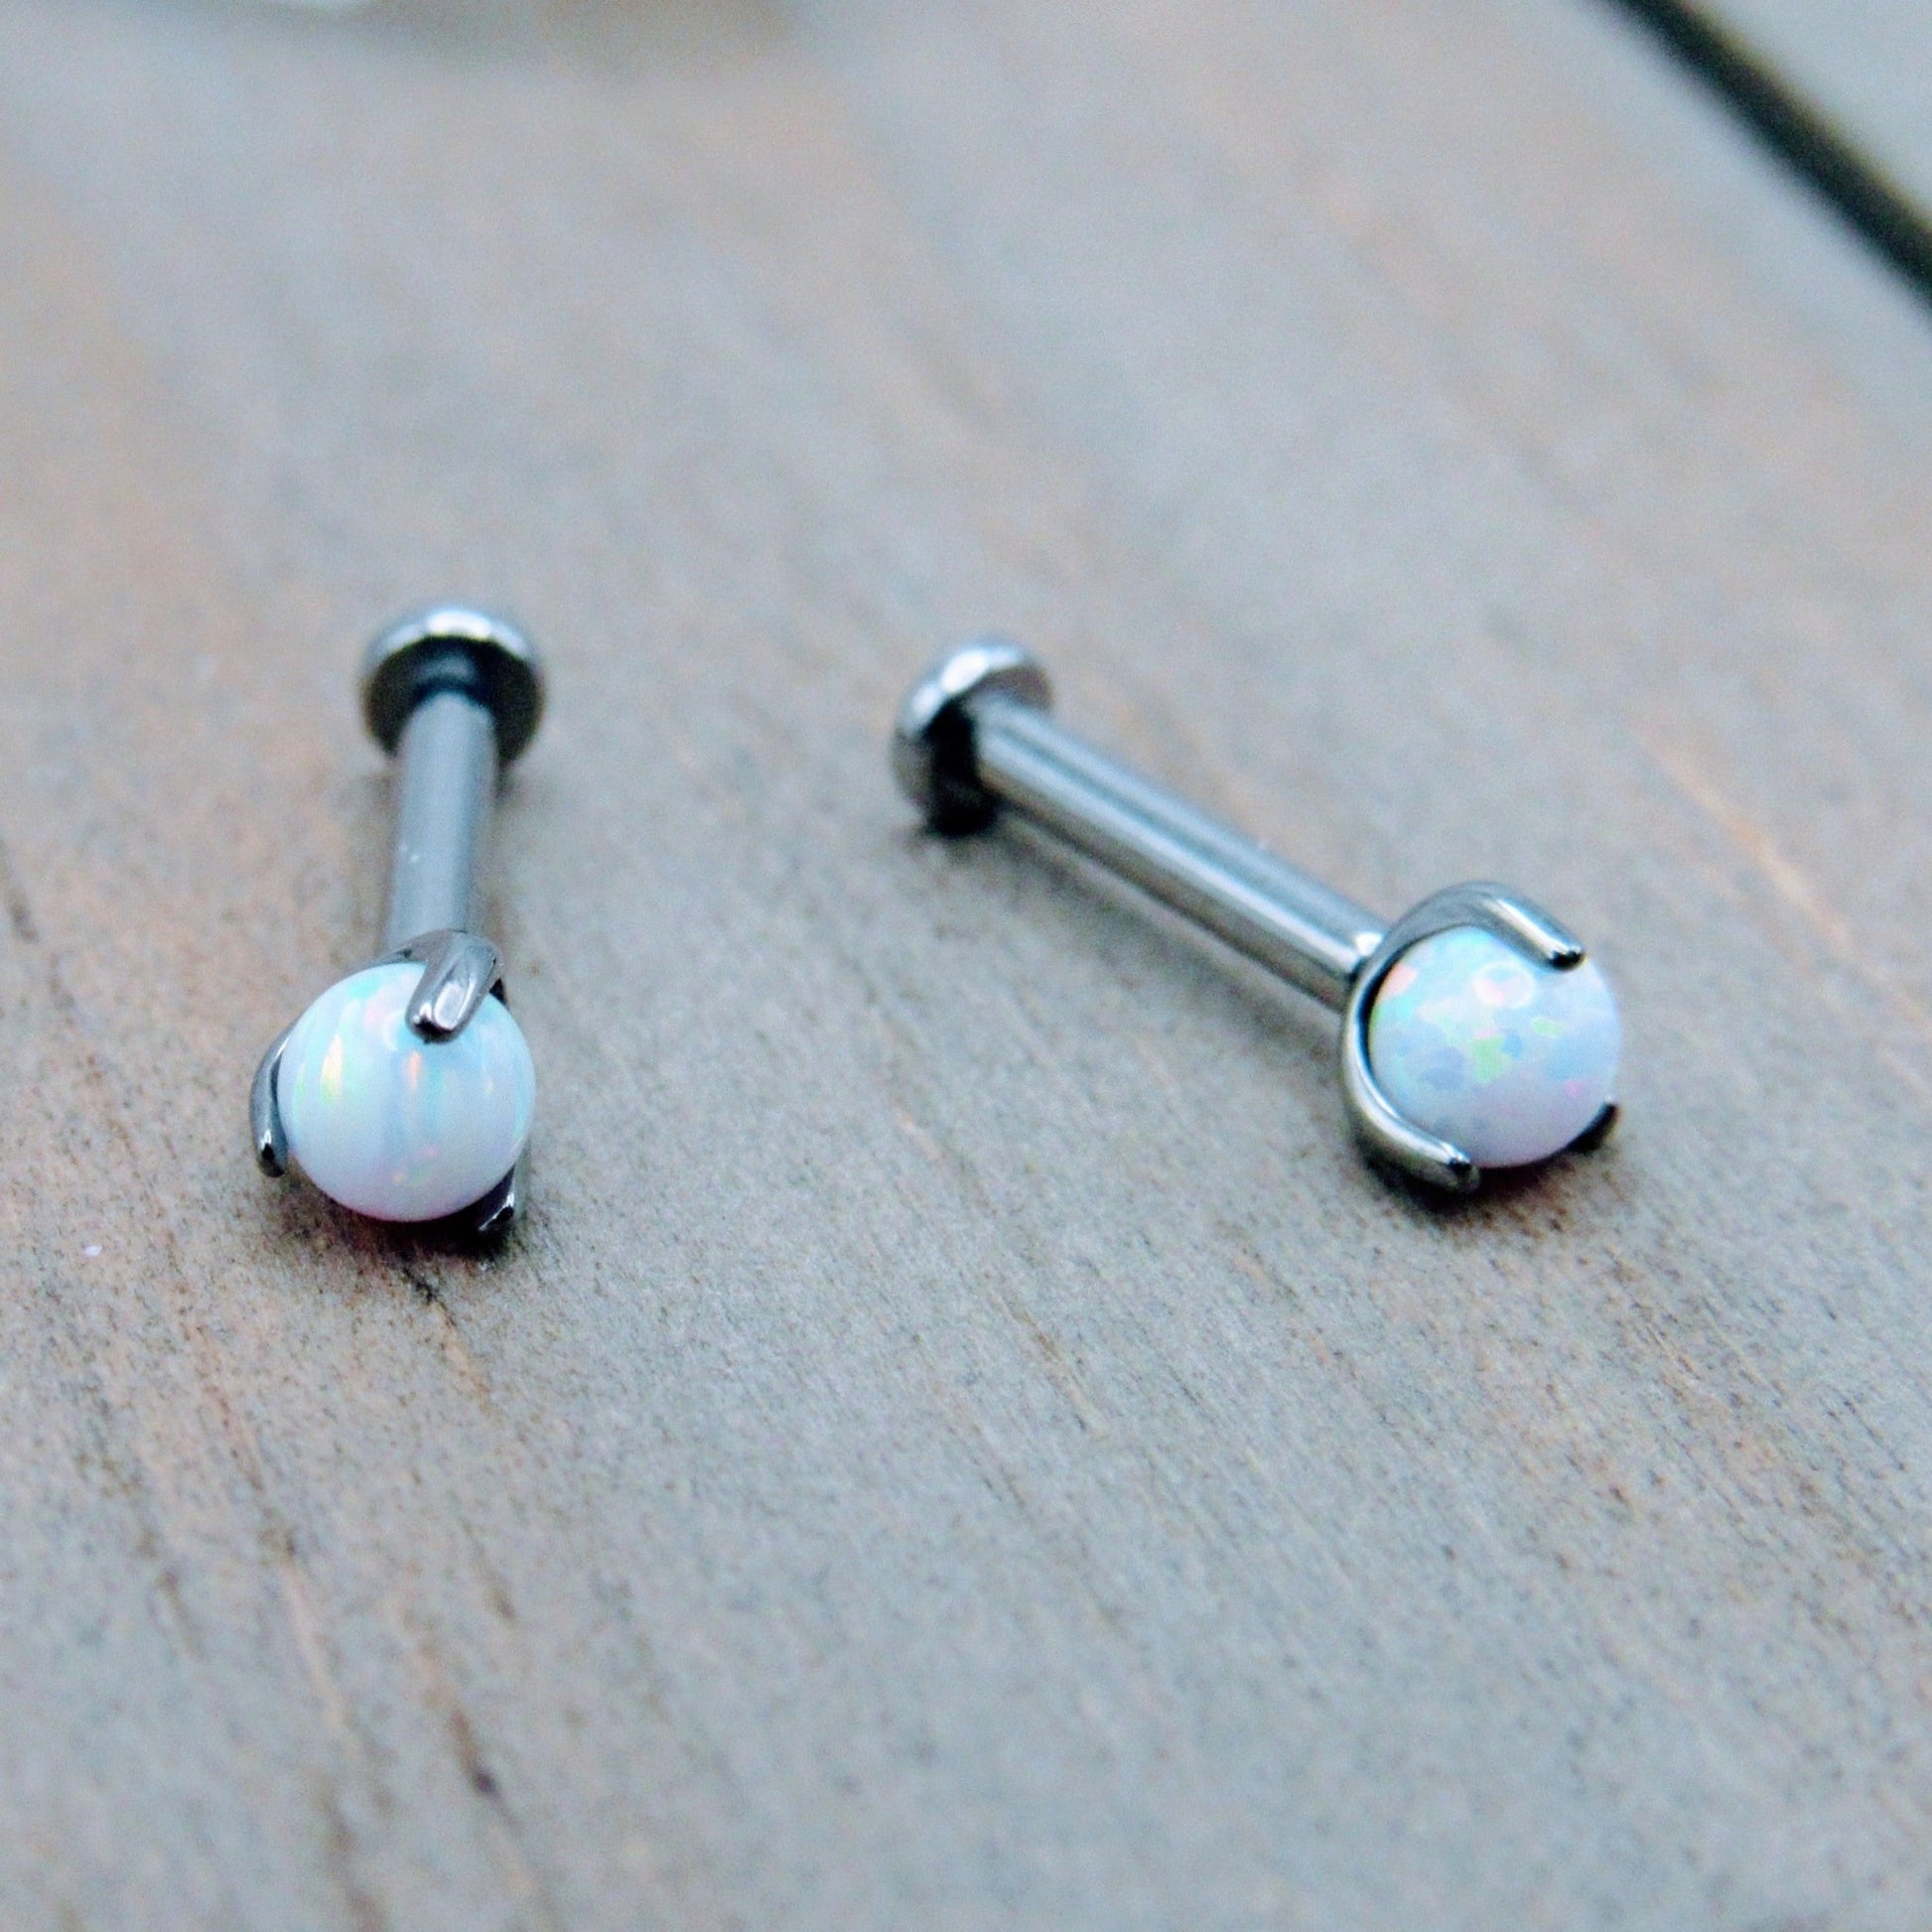 16g White opal titanium flat back earring stud set internally threaded 3mm prong set opals helix earlobe conch jewelry - Siren Body Jewelry